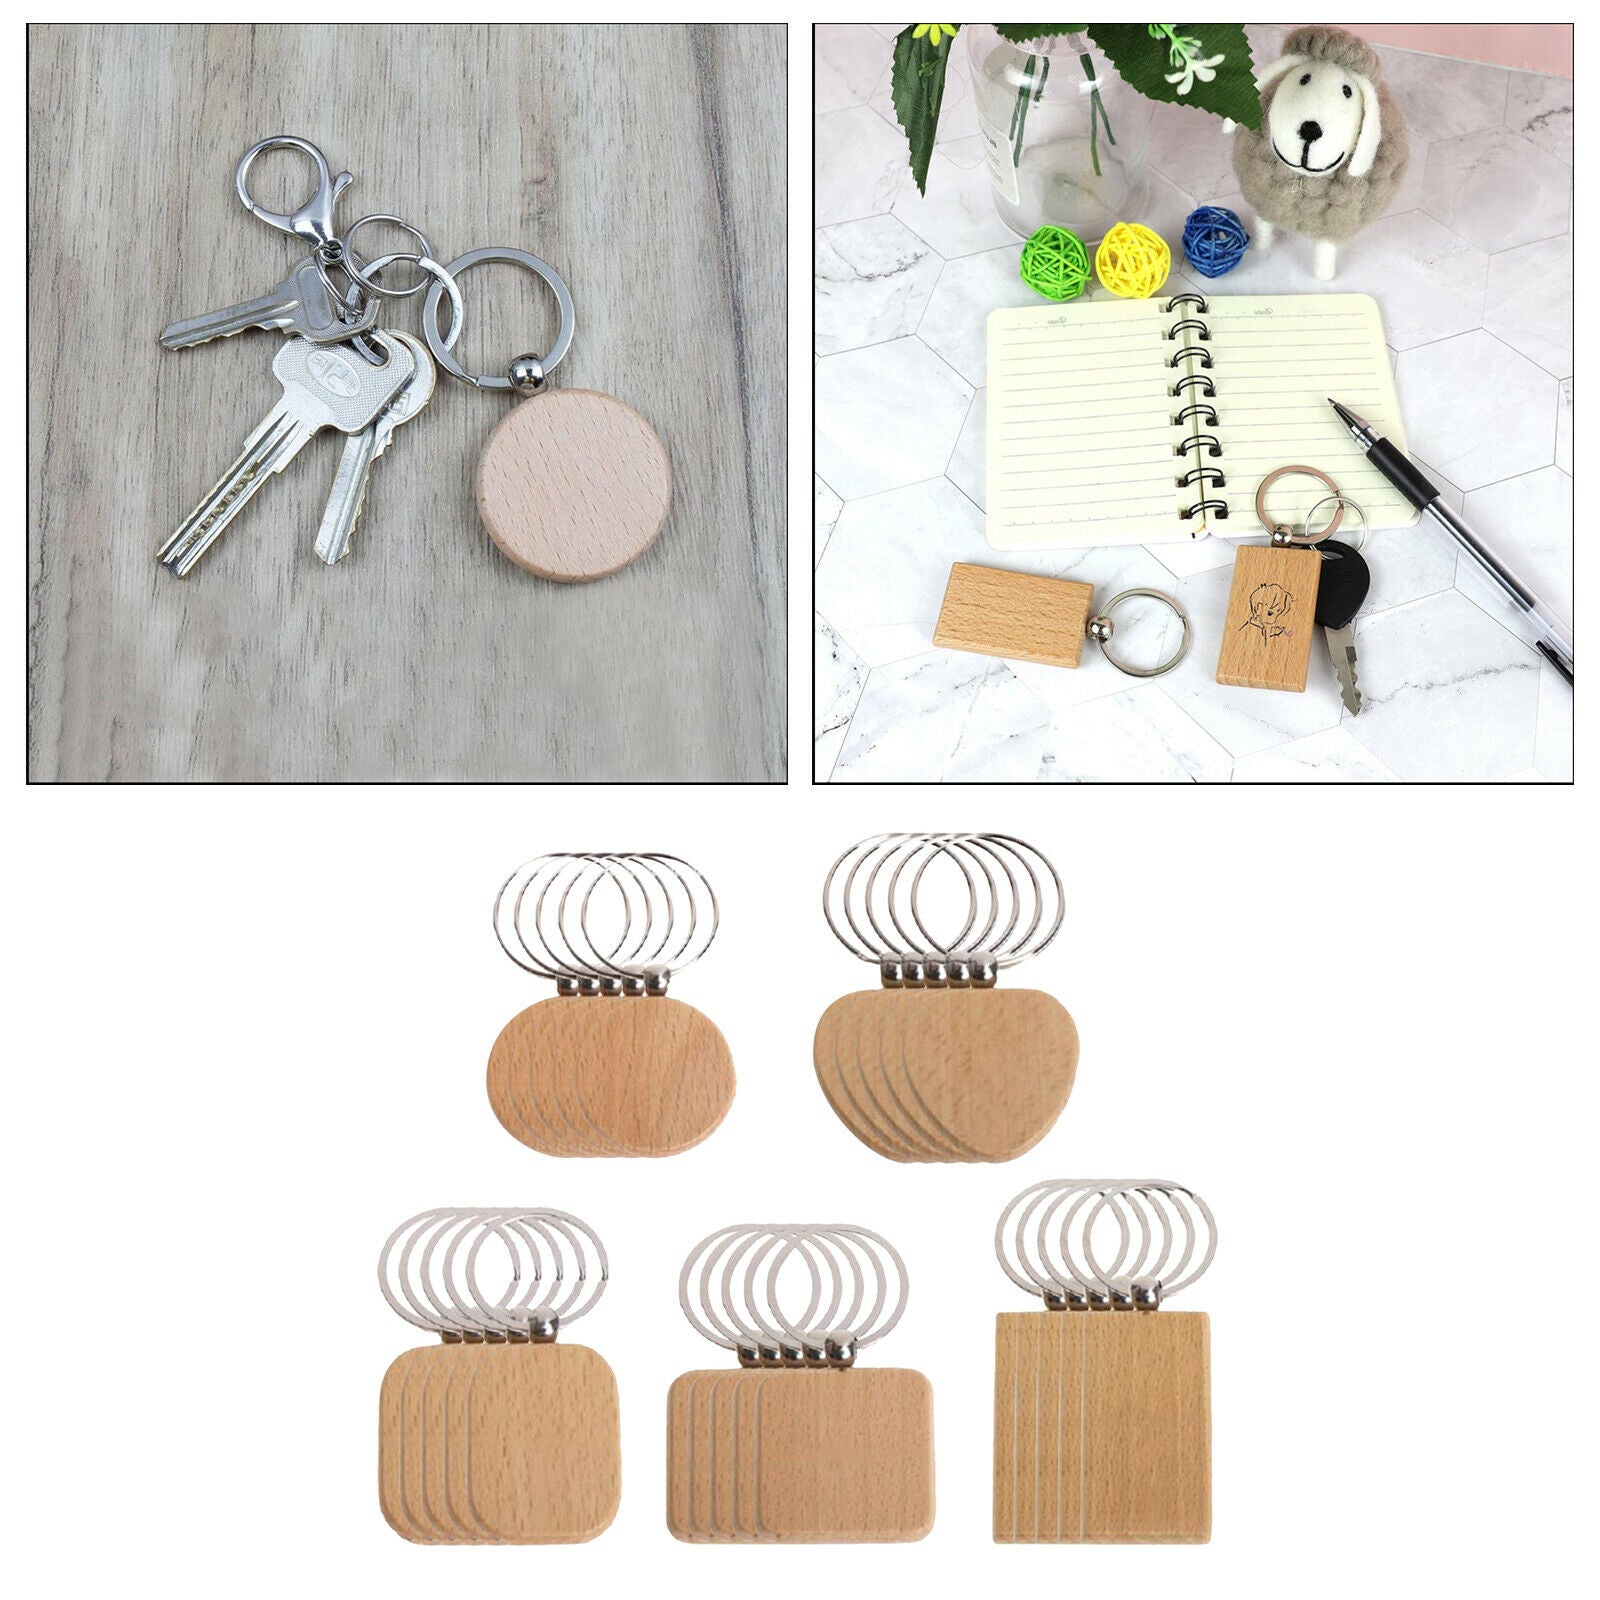 25x Unpainted Empty Plain Wood Key Chain Keychain Keyfob Bag